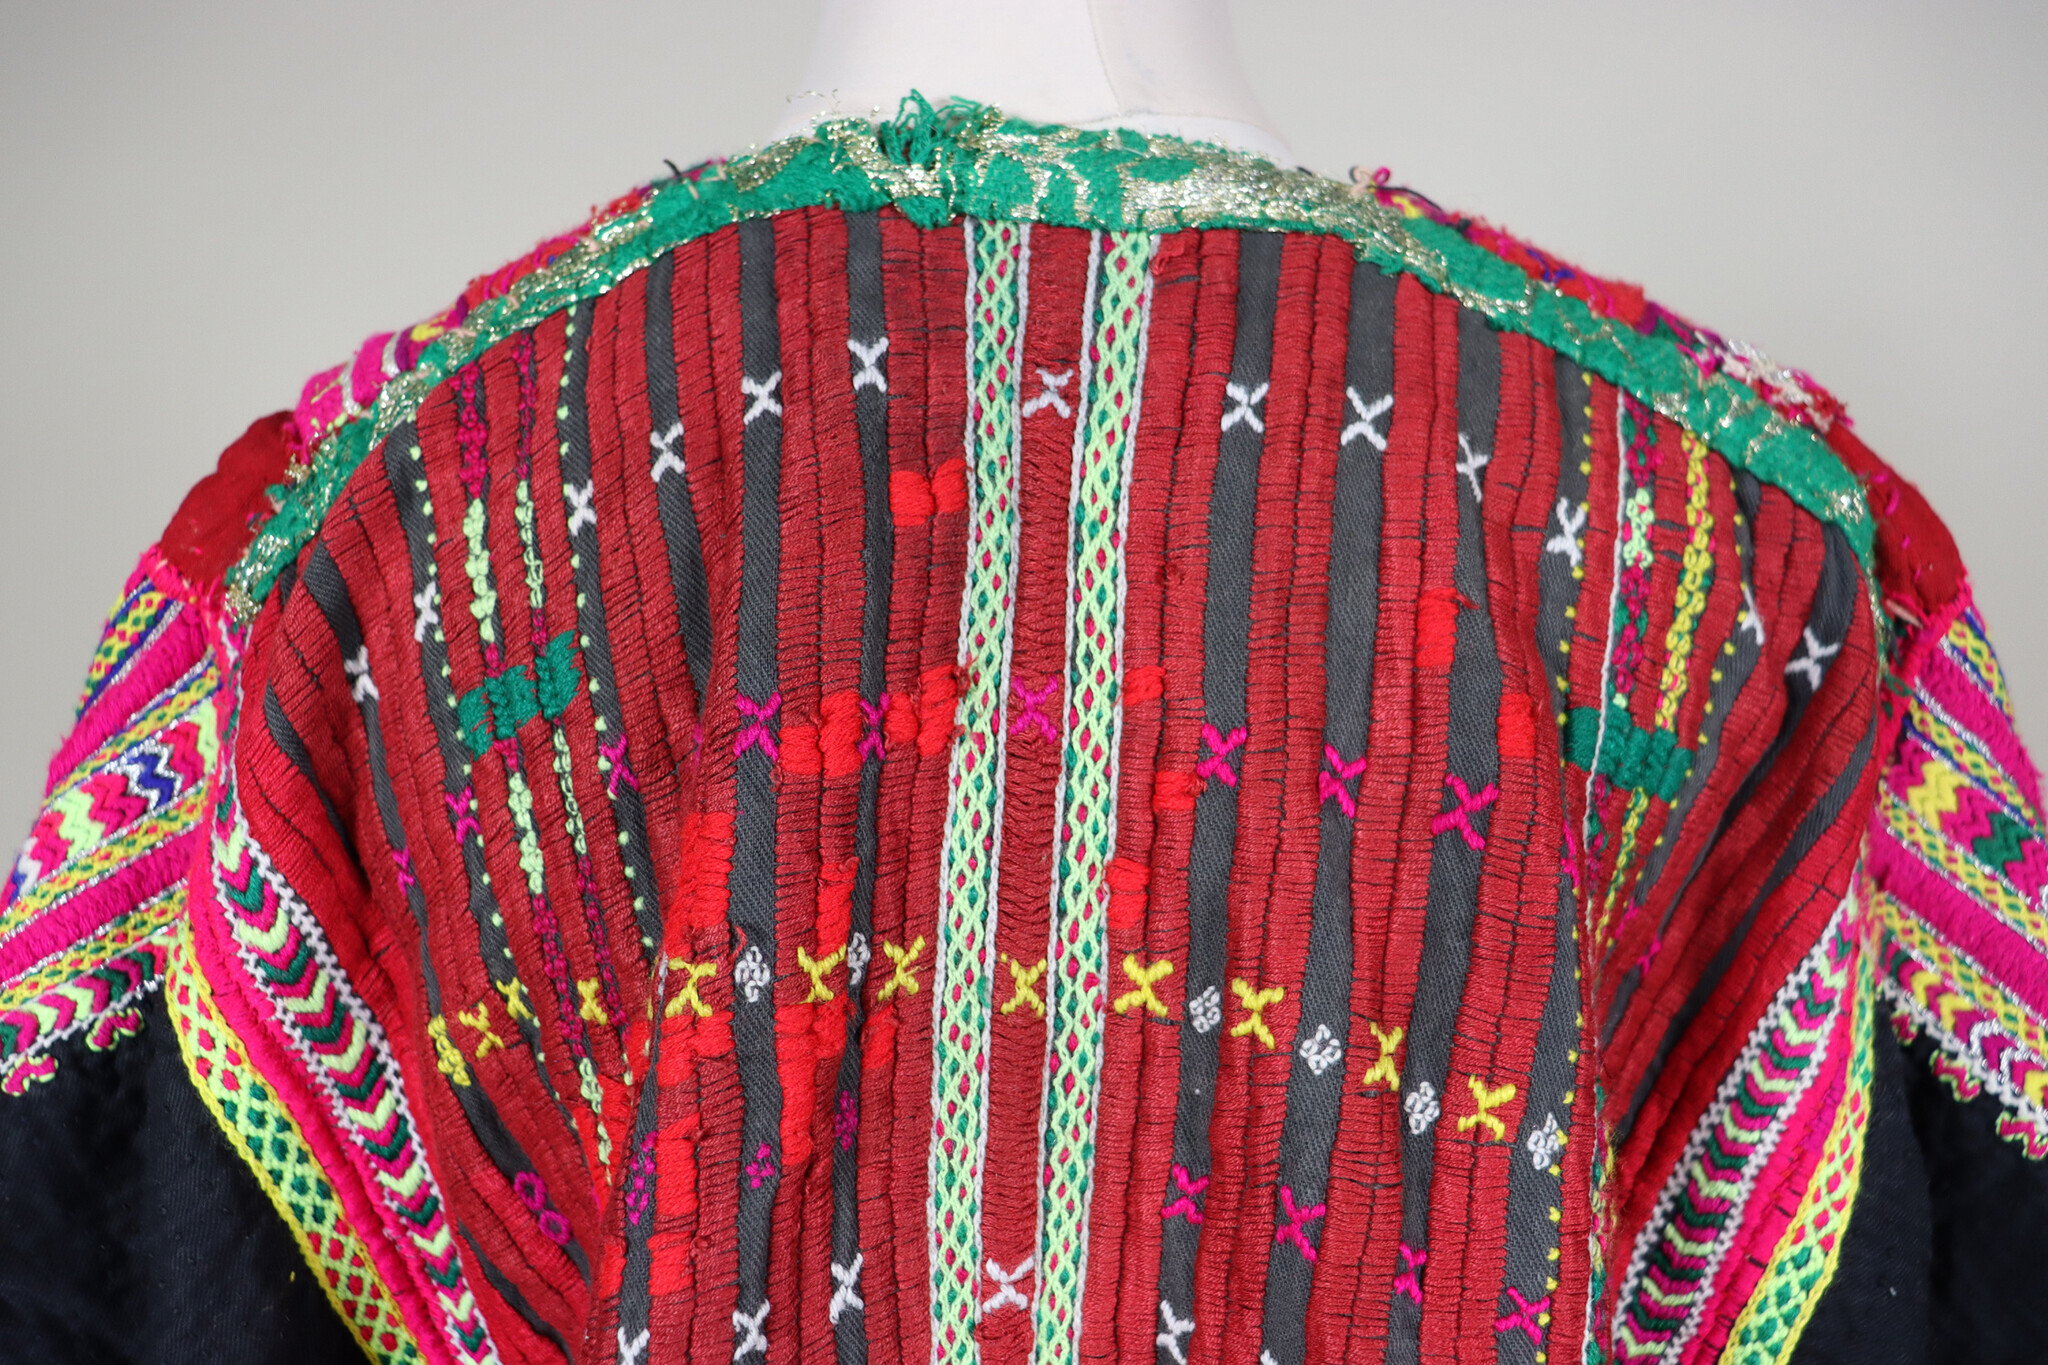 antique original Pakistan Afghanistan nuristan kohistan swat Woman embroidered Dress jumlo No:WL-5